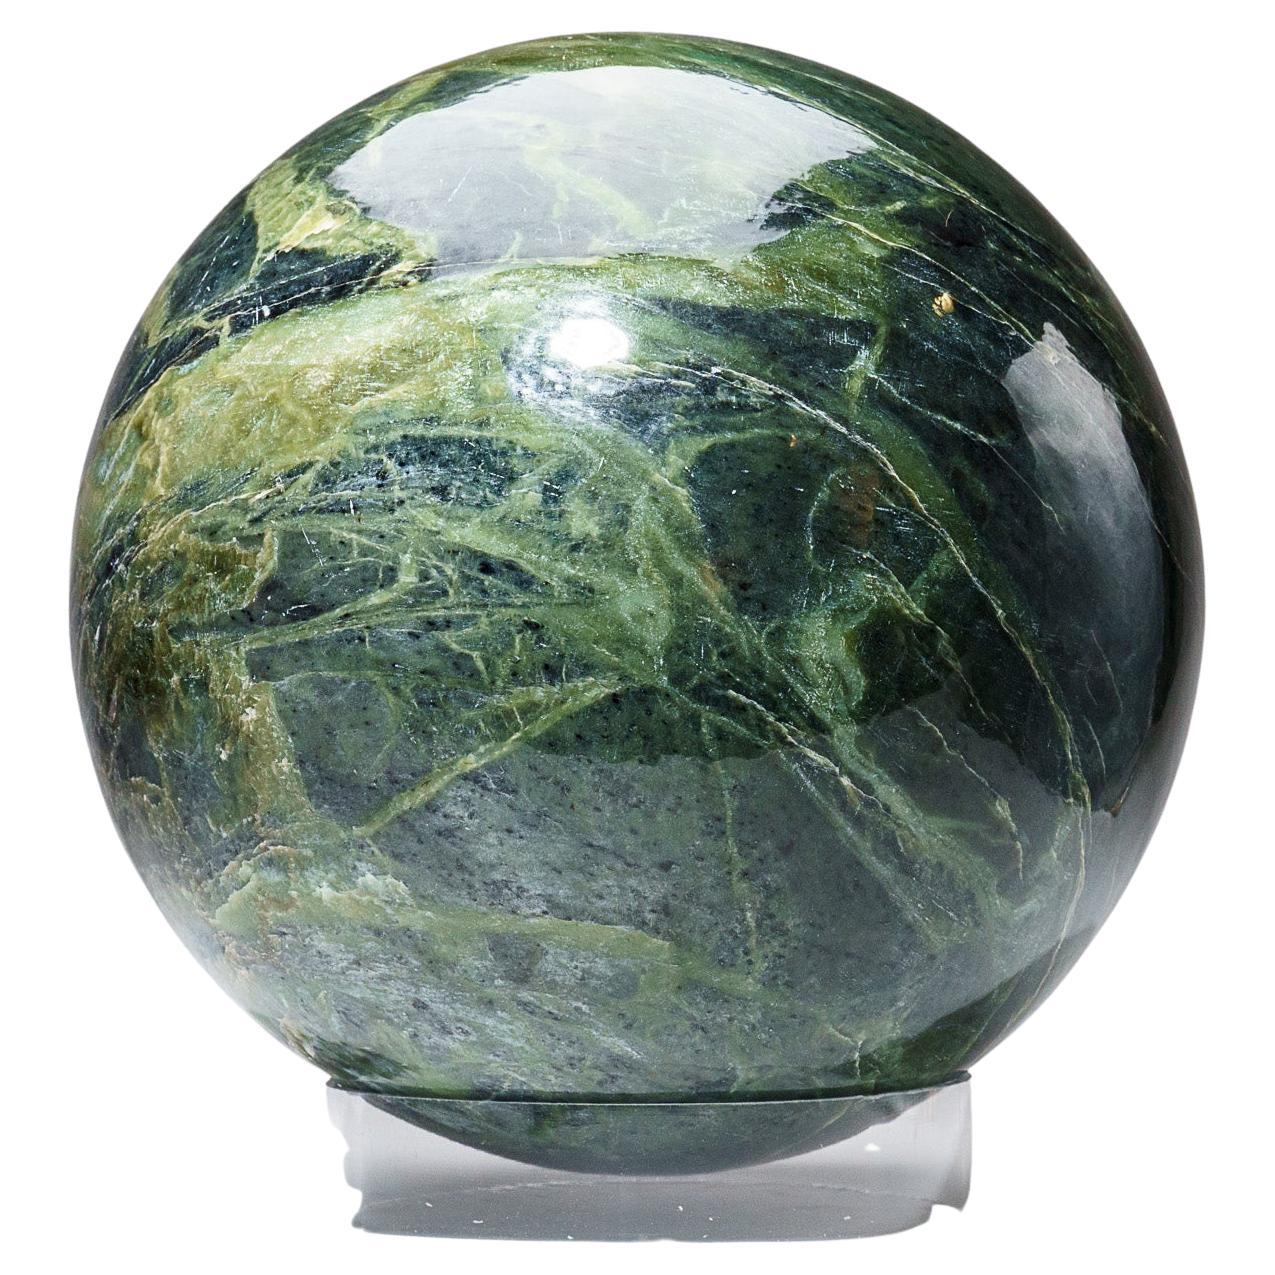 Große echte polierte Nephrit-Jade-Kugel aus Pakistan,65 lbs, aus echtem poliertem Nephrit